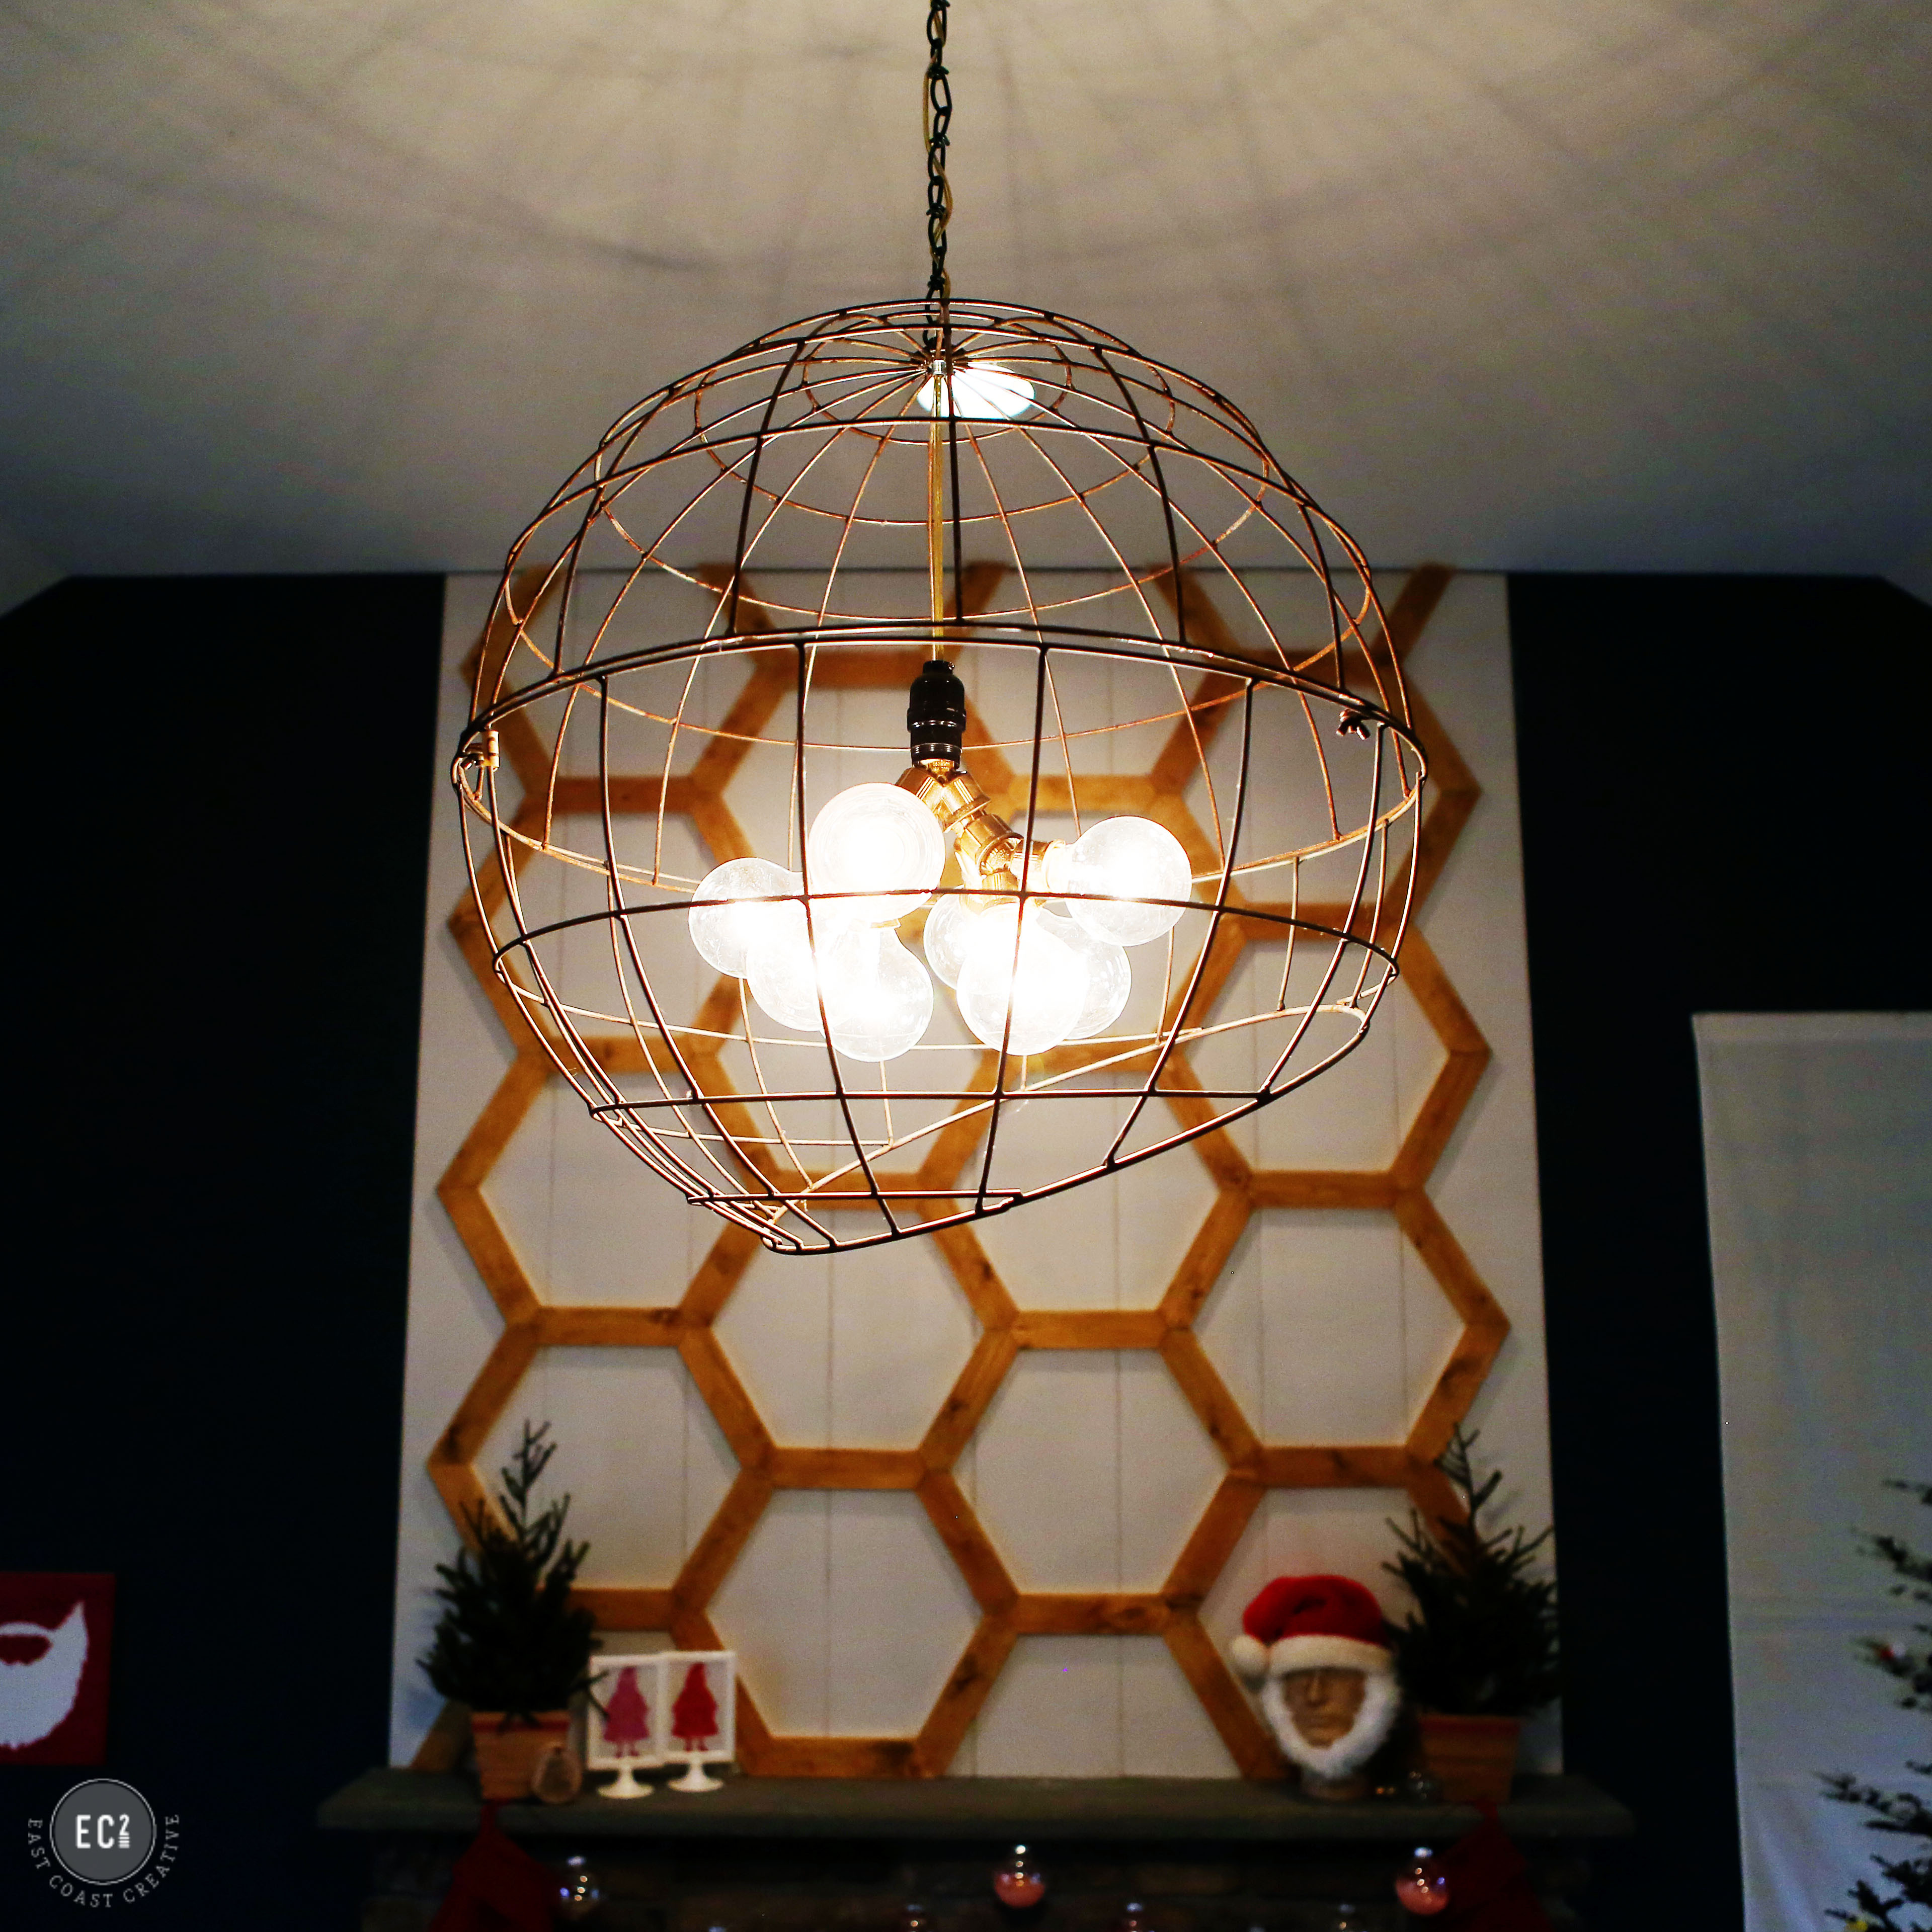 Best ideas about DIY Hanging Light
. Save or Pin DIY Modern Pendant Light East Coast Creative Blog Now.